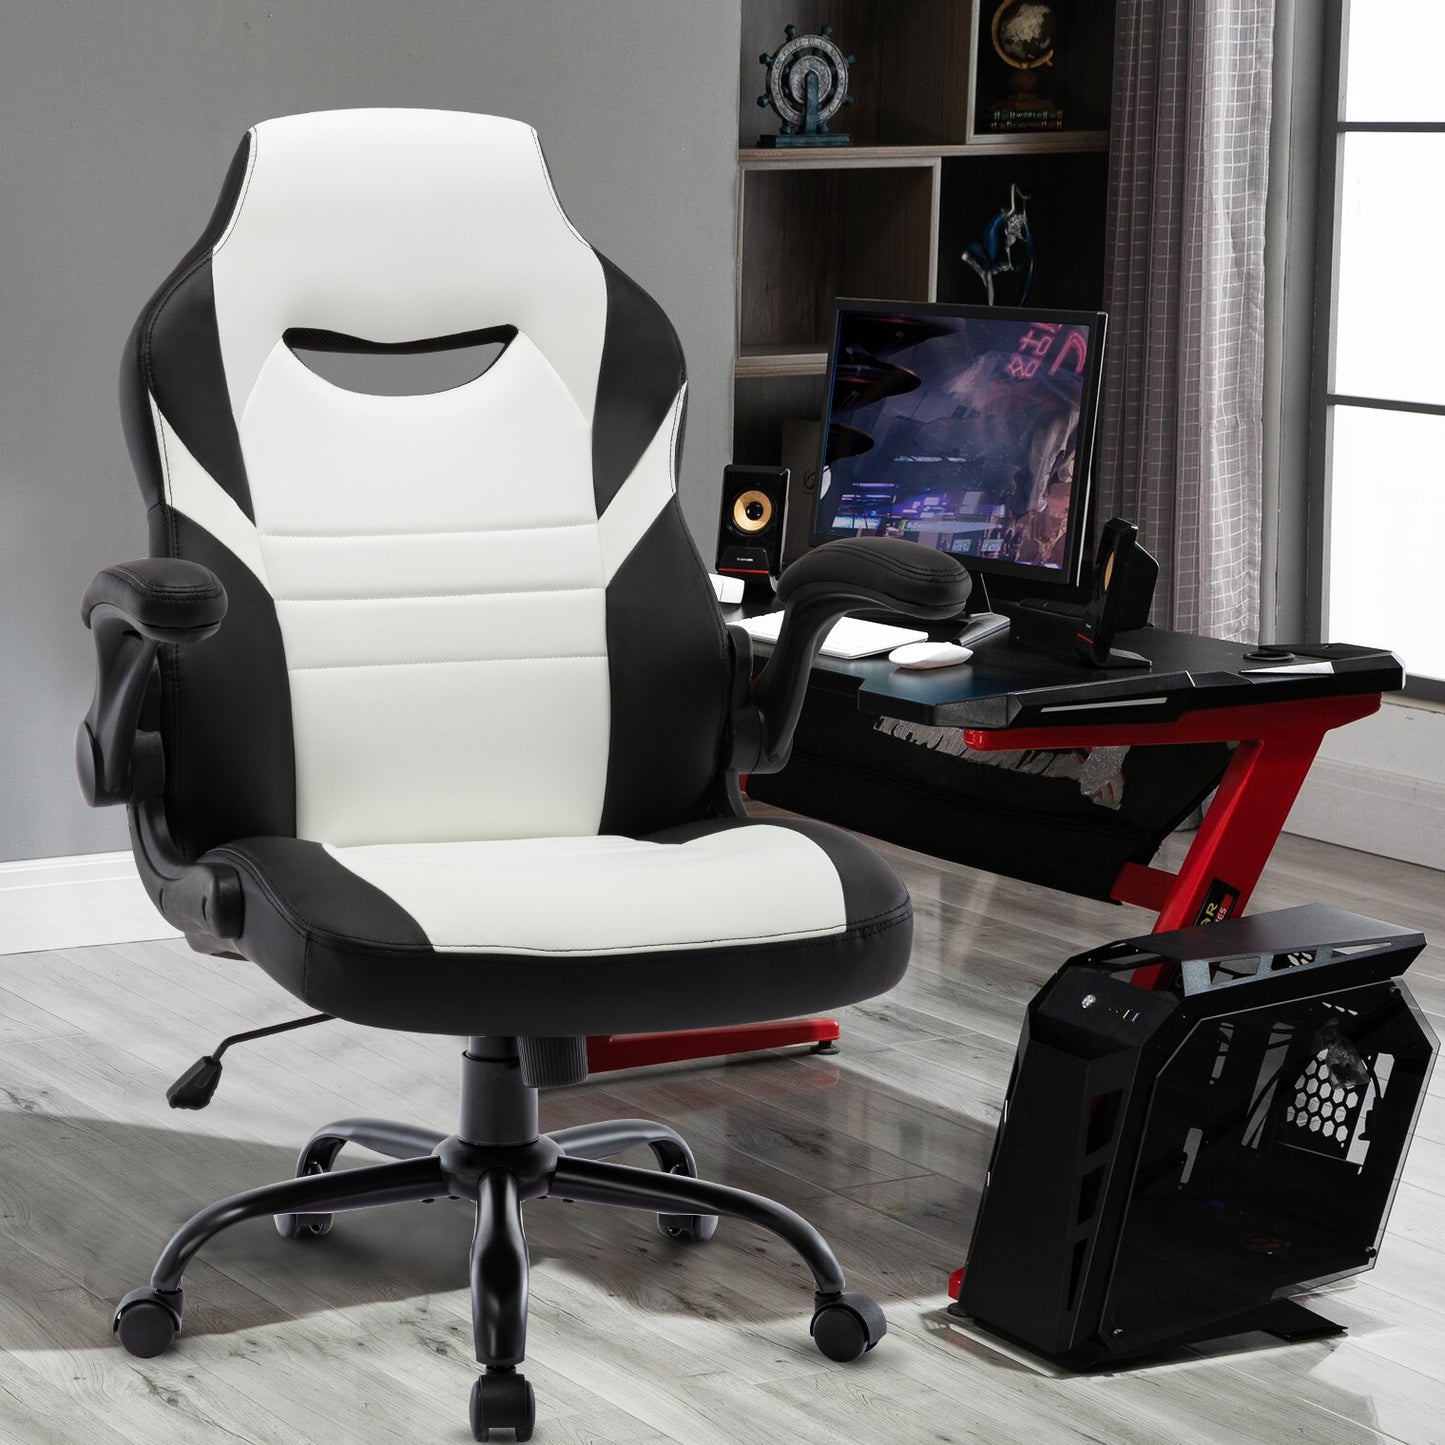 Ergonomic Adjustable Swivel Computer Racing Game Chair (Black)